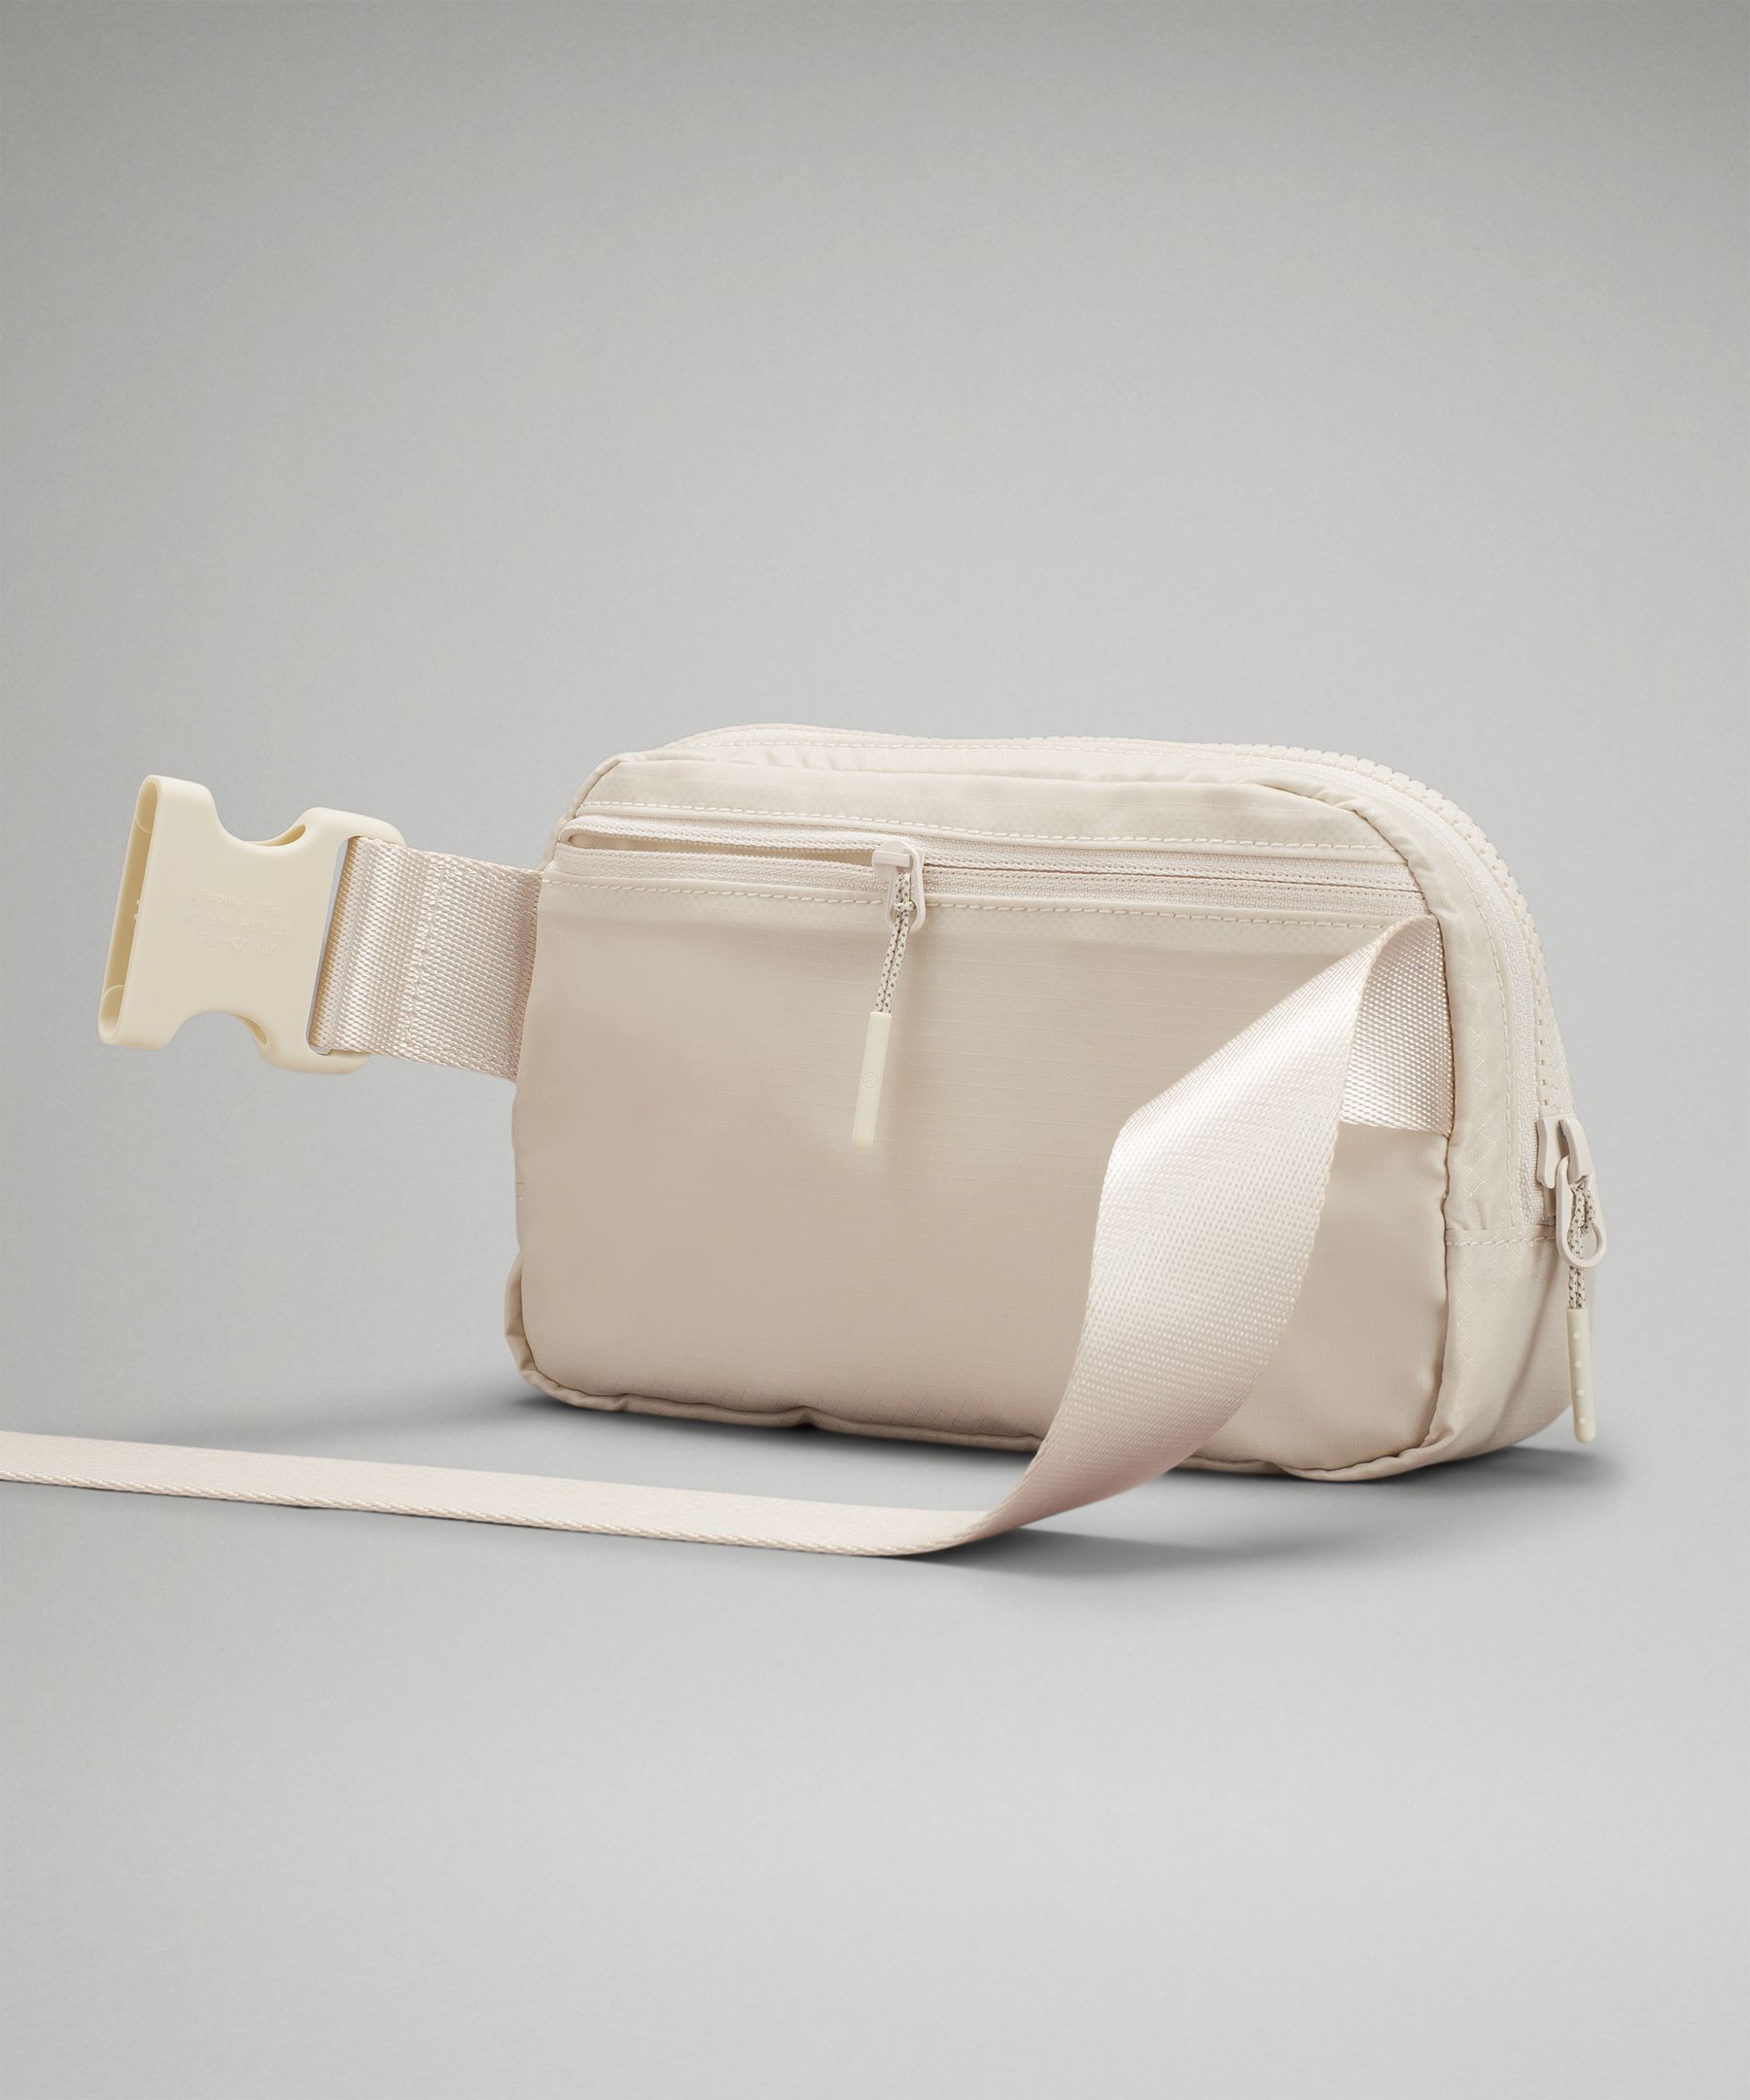 Lululemon Everywhere Belt Bag bundle /3 bags/ White Opal, silver drop